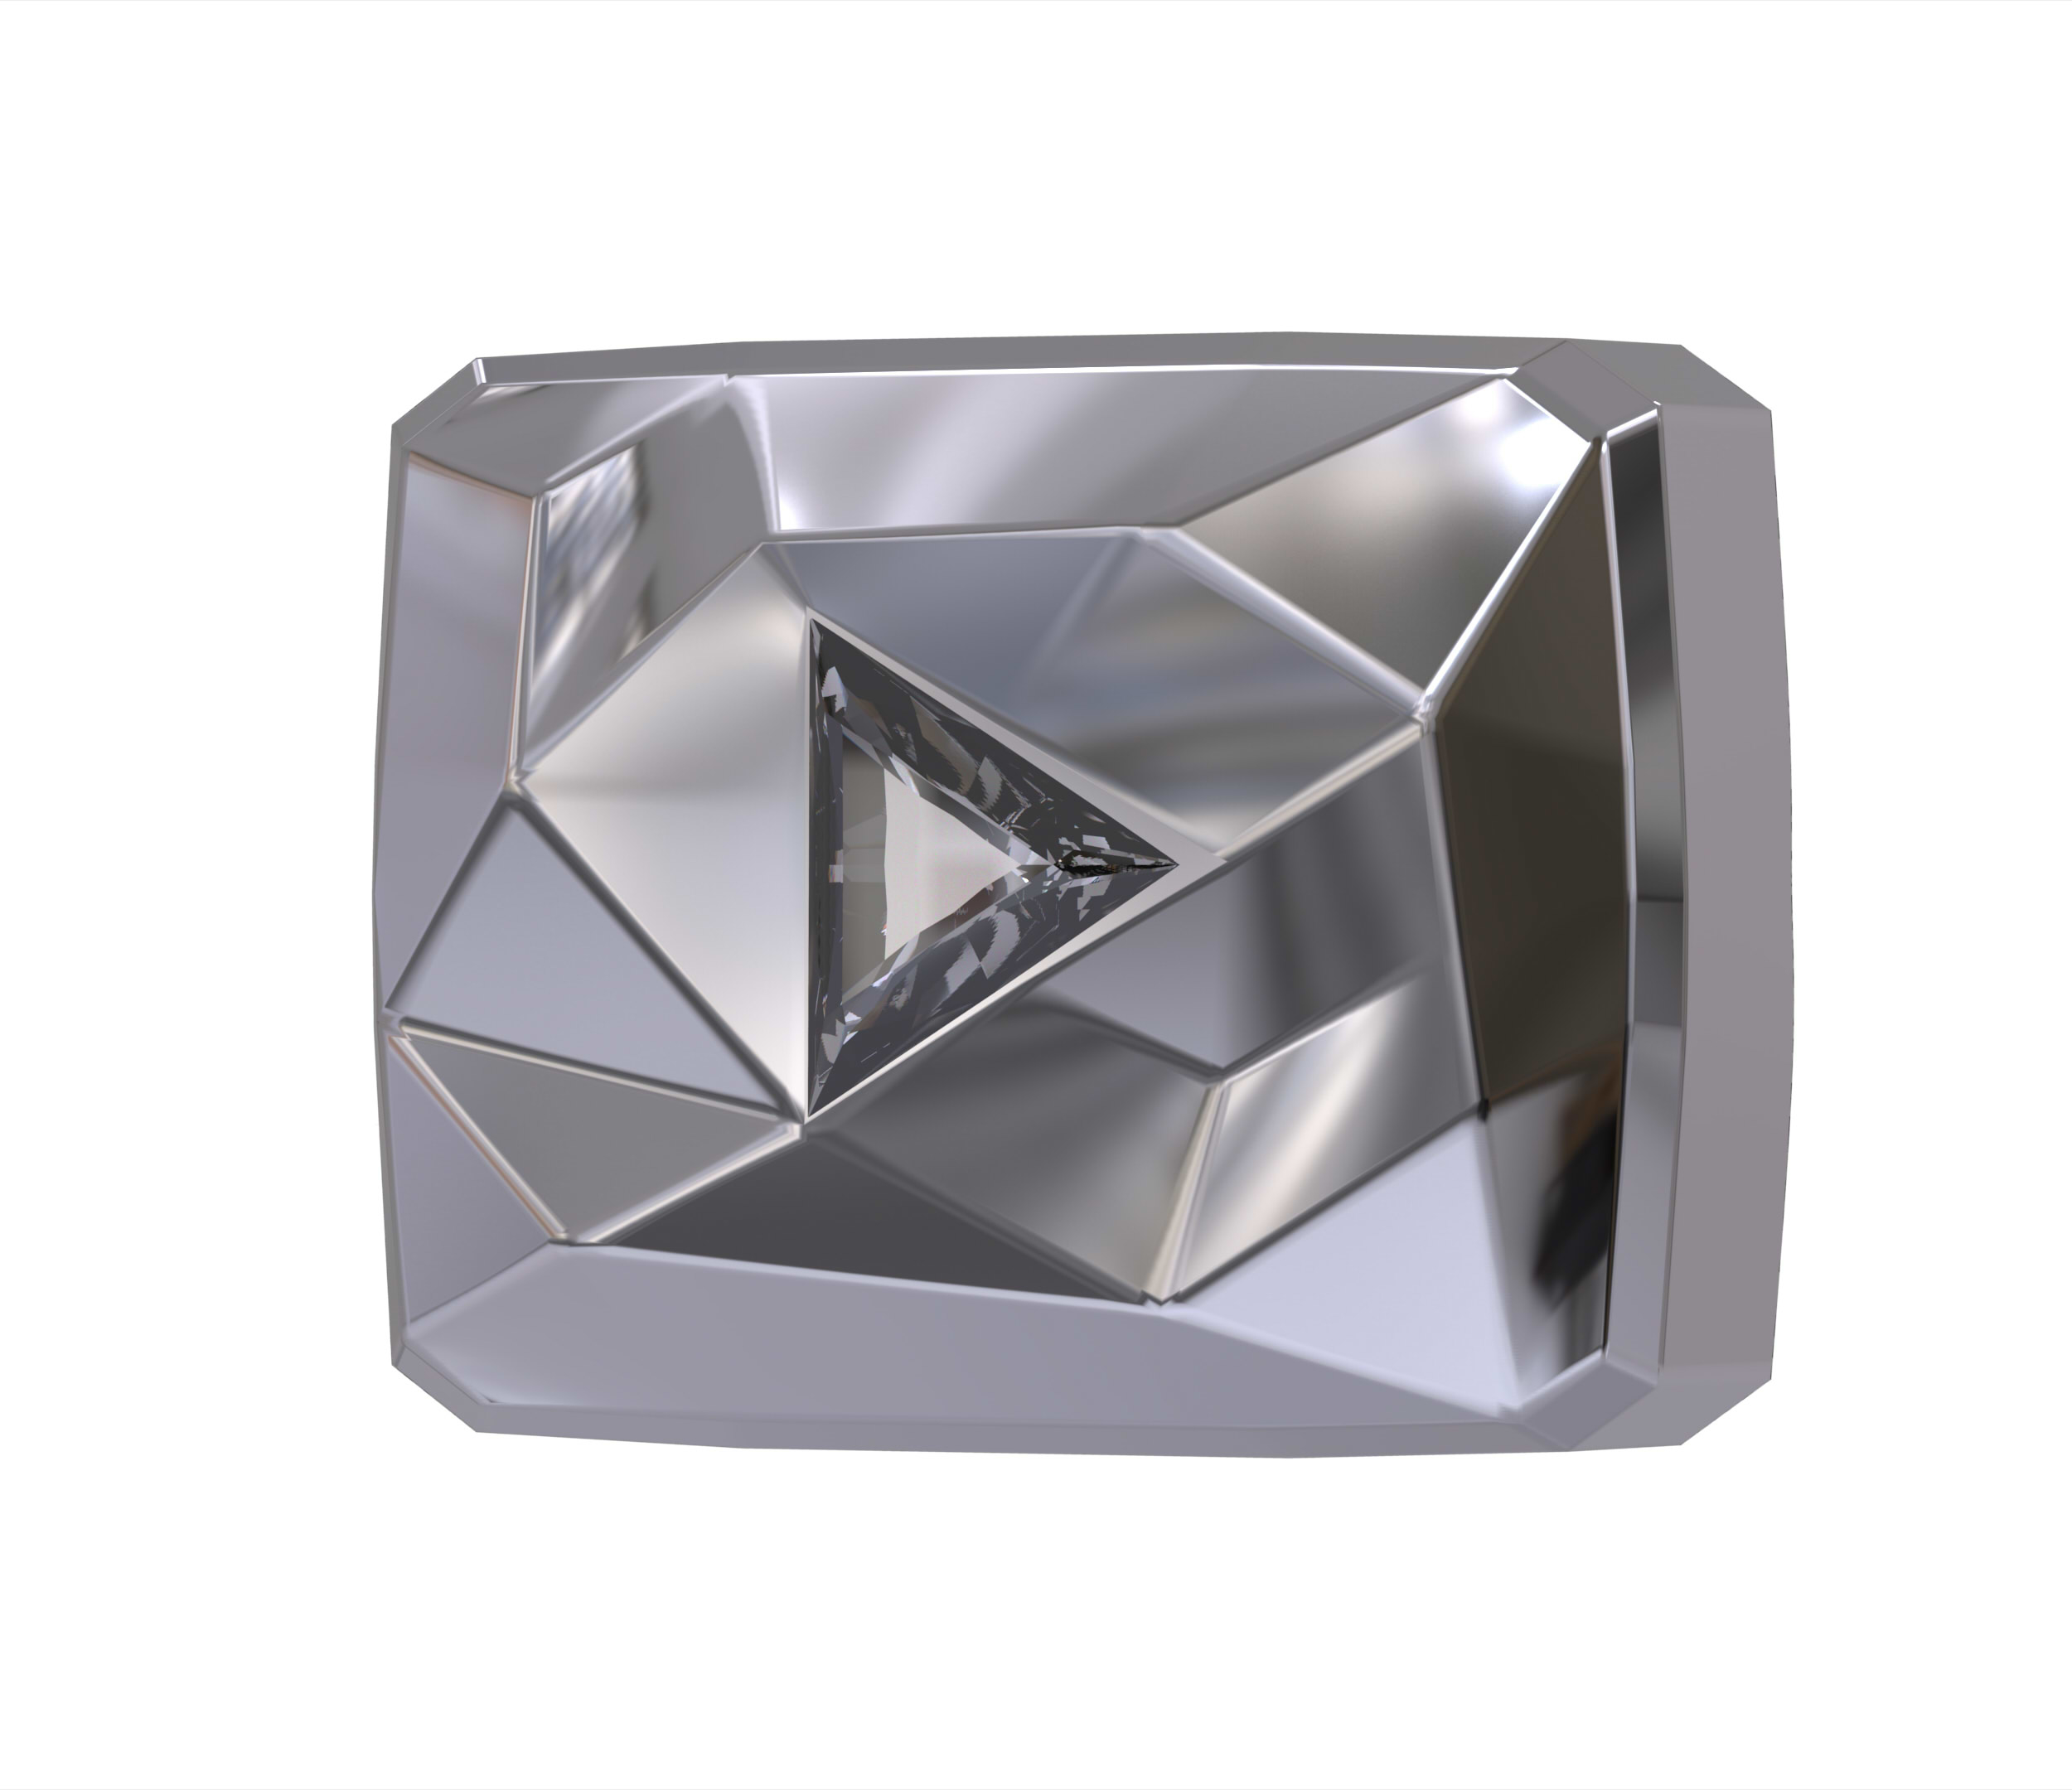 3D youtube diamond play button - TurboSquid 1538404